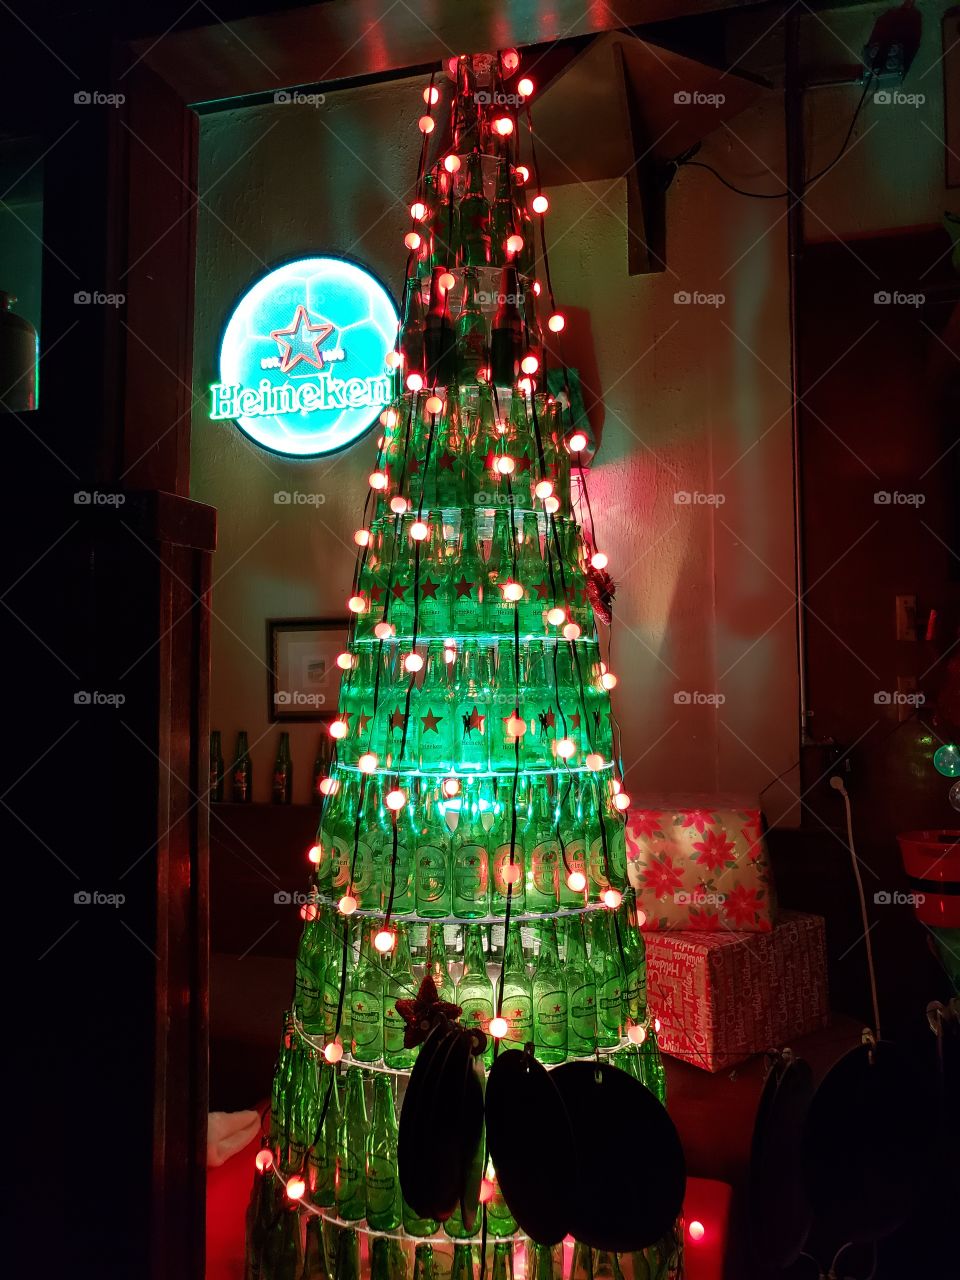 The Heineken Christmas Tree